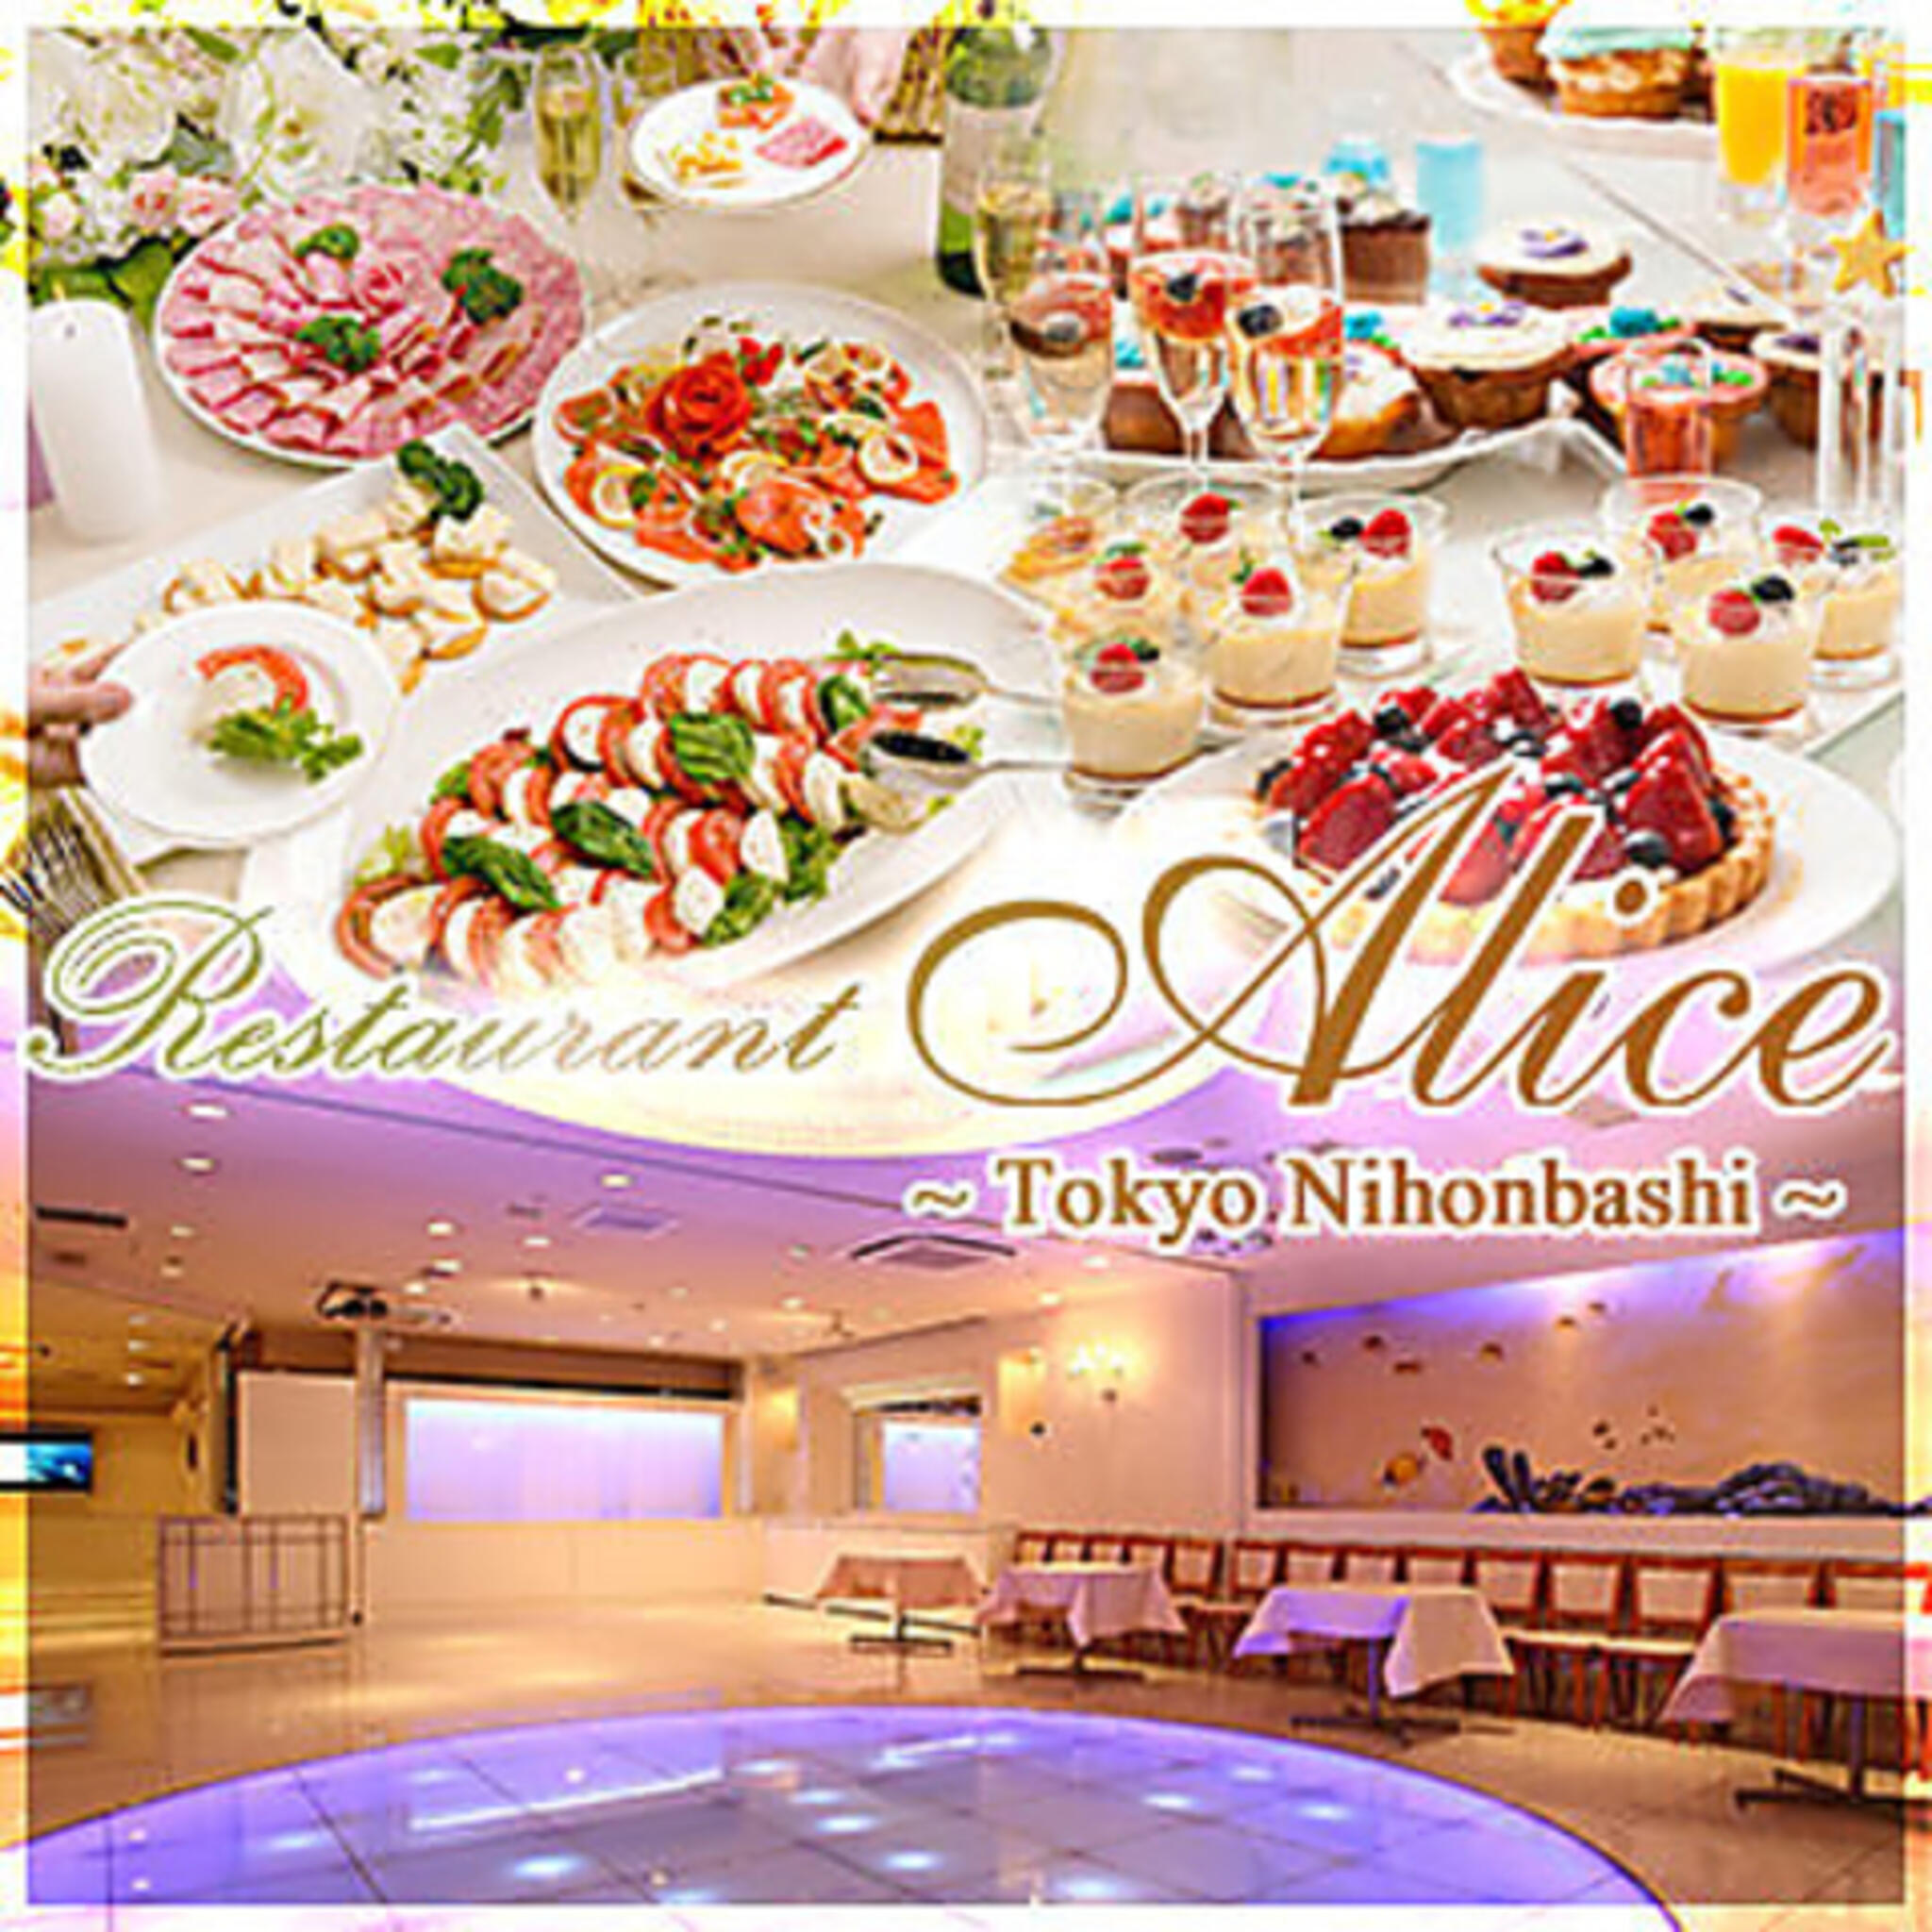 Restaurant Alice Tokyo Nihonbashi 東京日本橋店の代表写真7